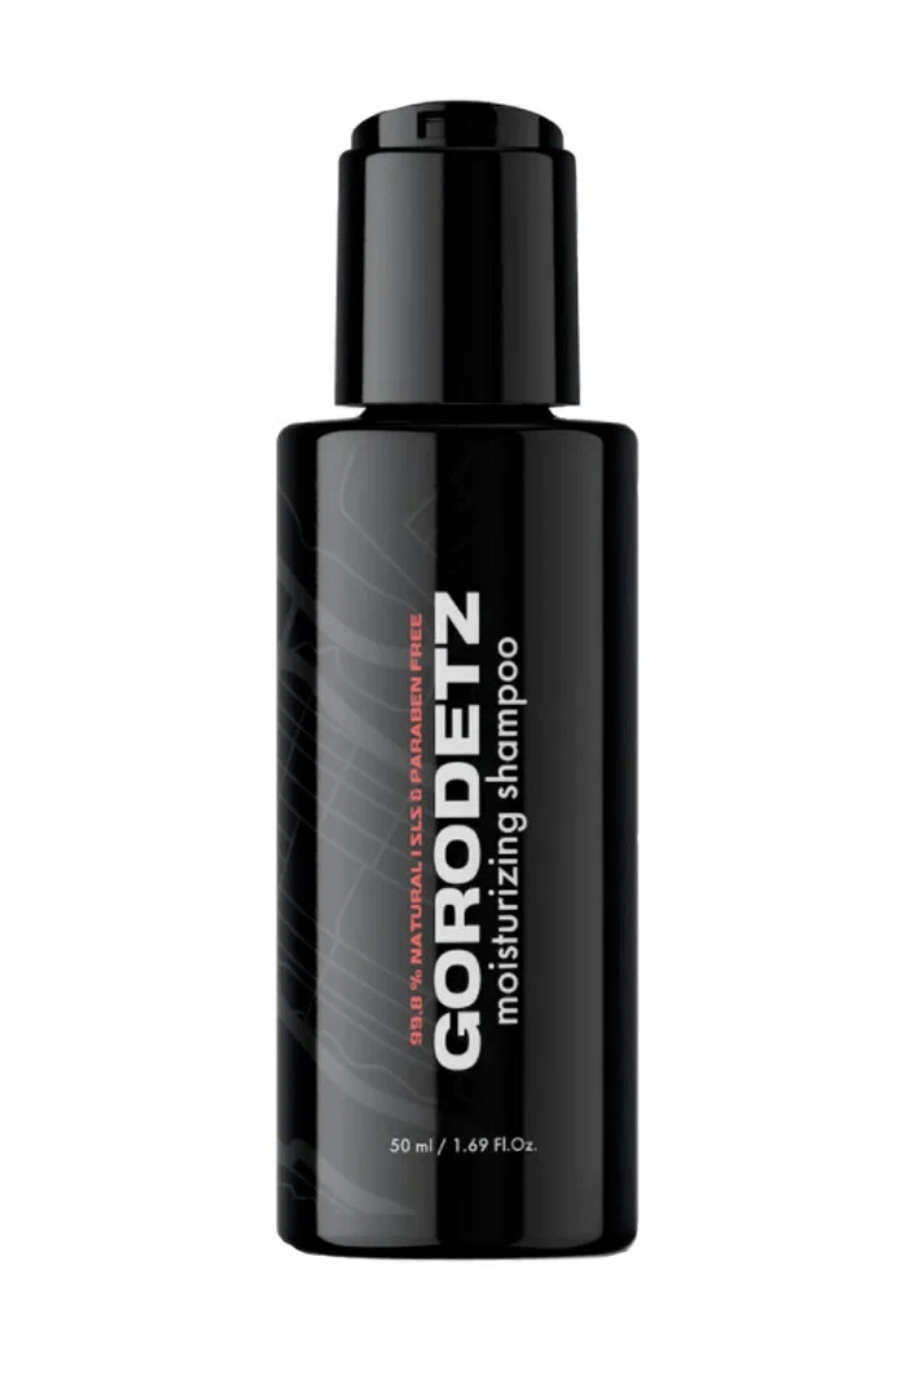 GORODETZ Moisturizing shampoo / Увлажняющий шампунь с ароматом Лемонграсс и Белый Чай 50 мл. (Travel size)